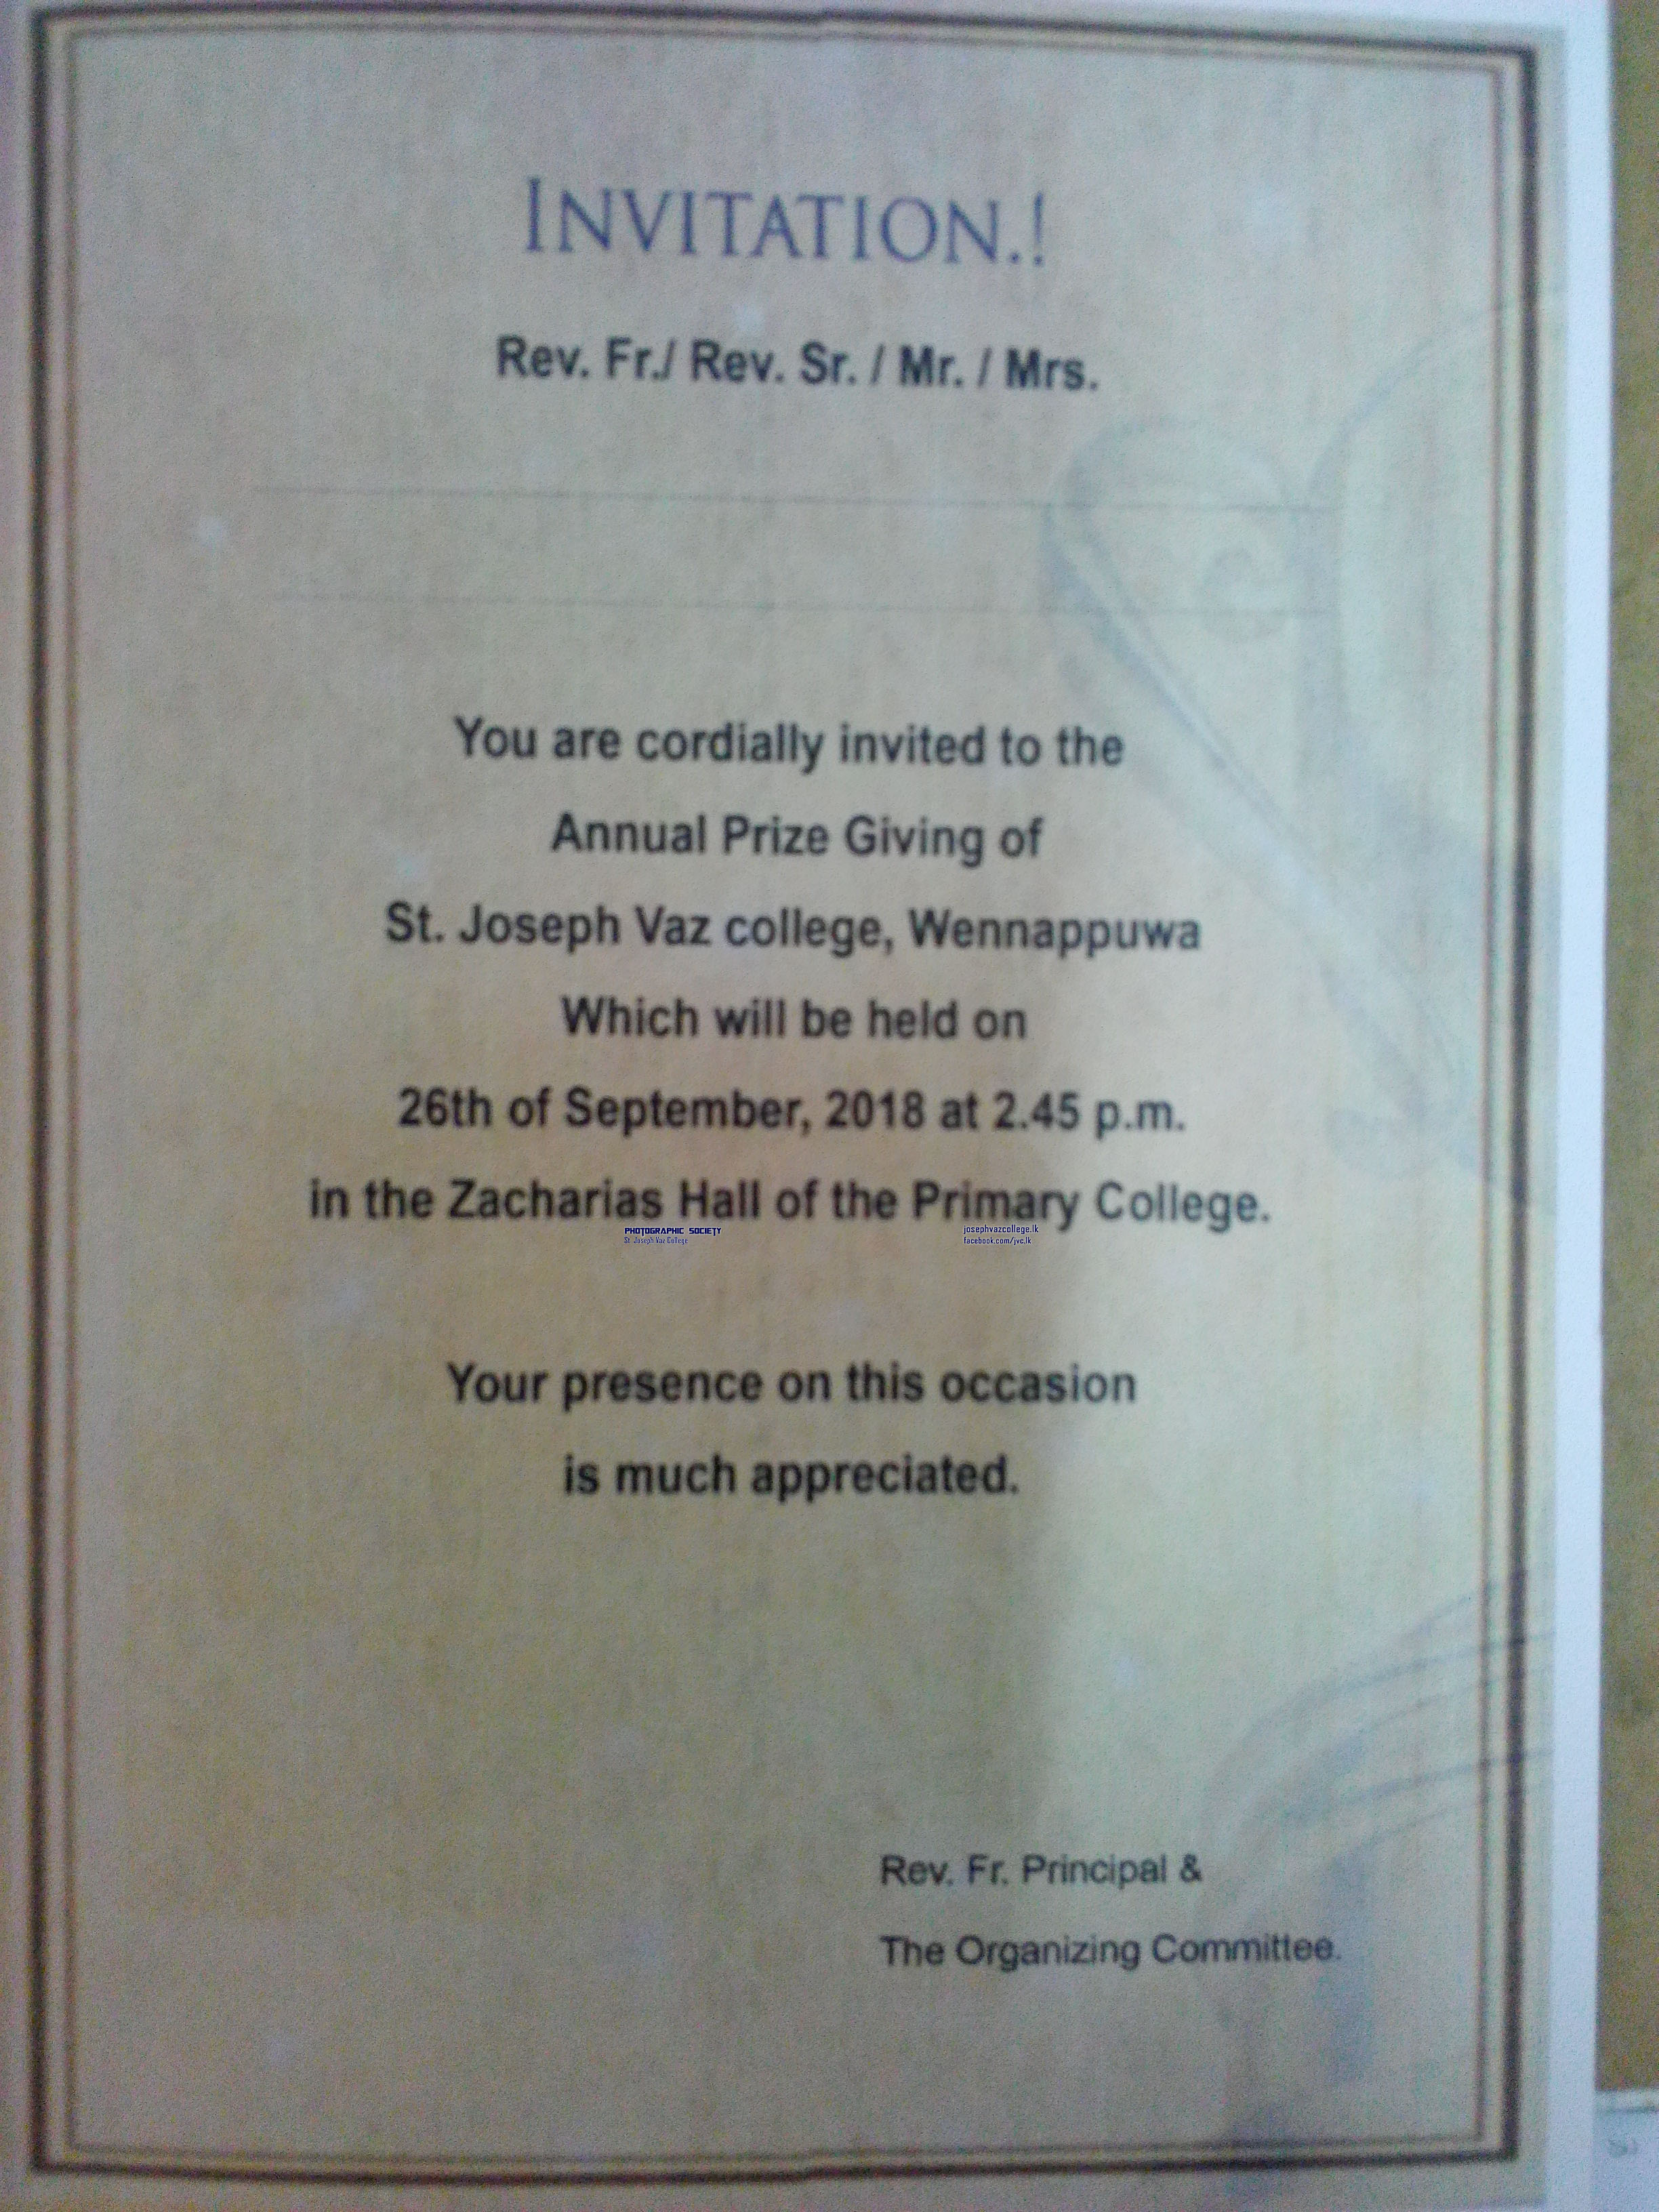 Prize Giving 2018 - Invitaion - St. Joseph Vaz College - Wennappuwa - Sri Lanka